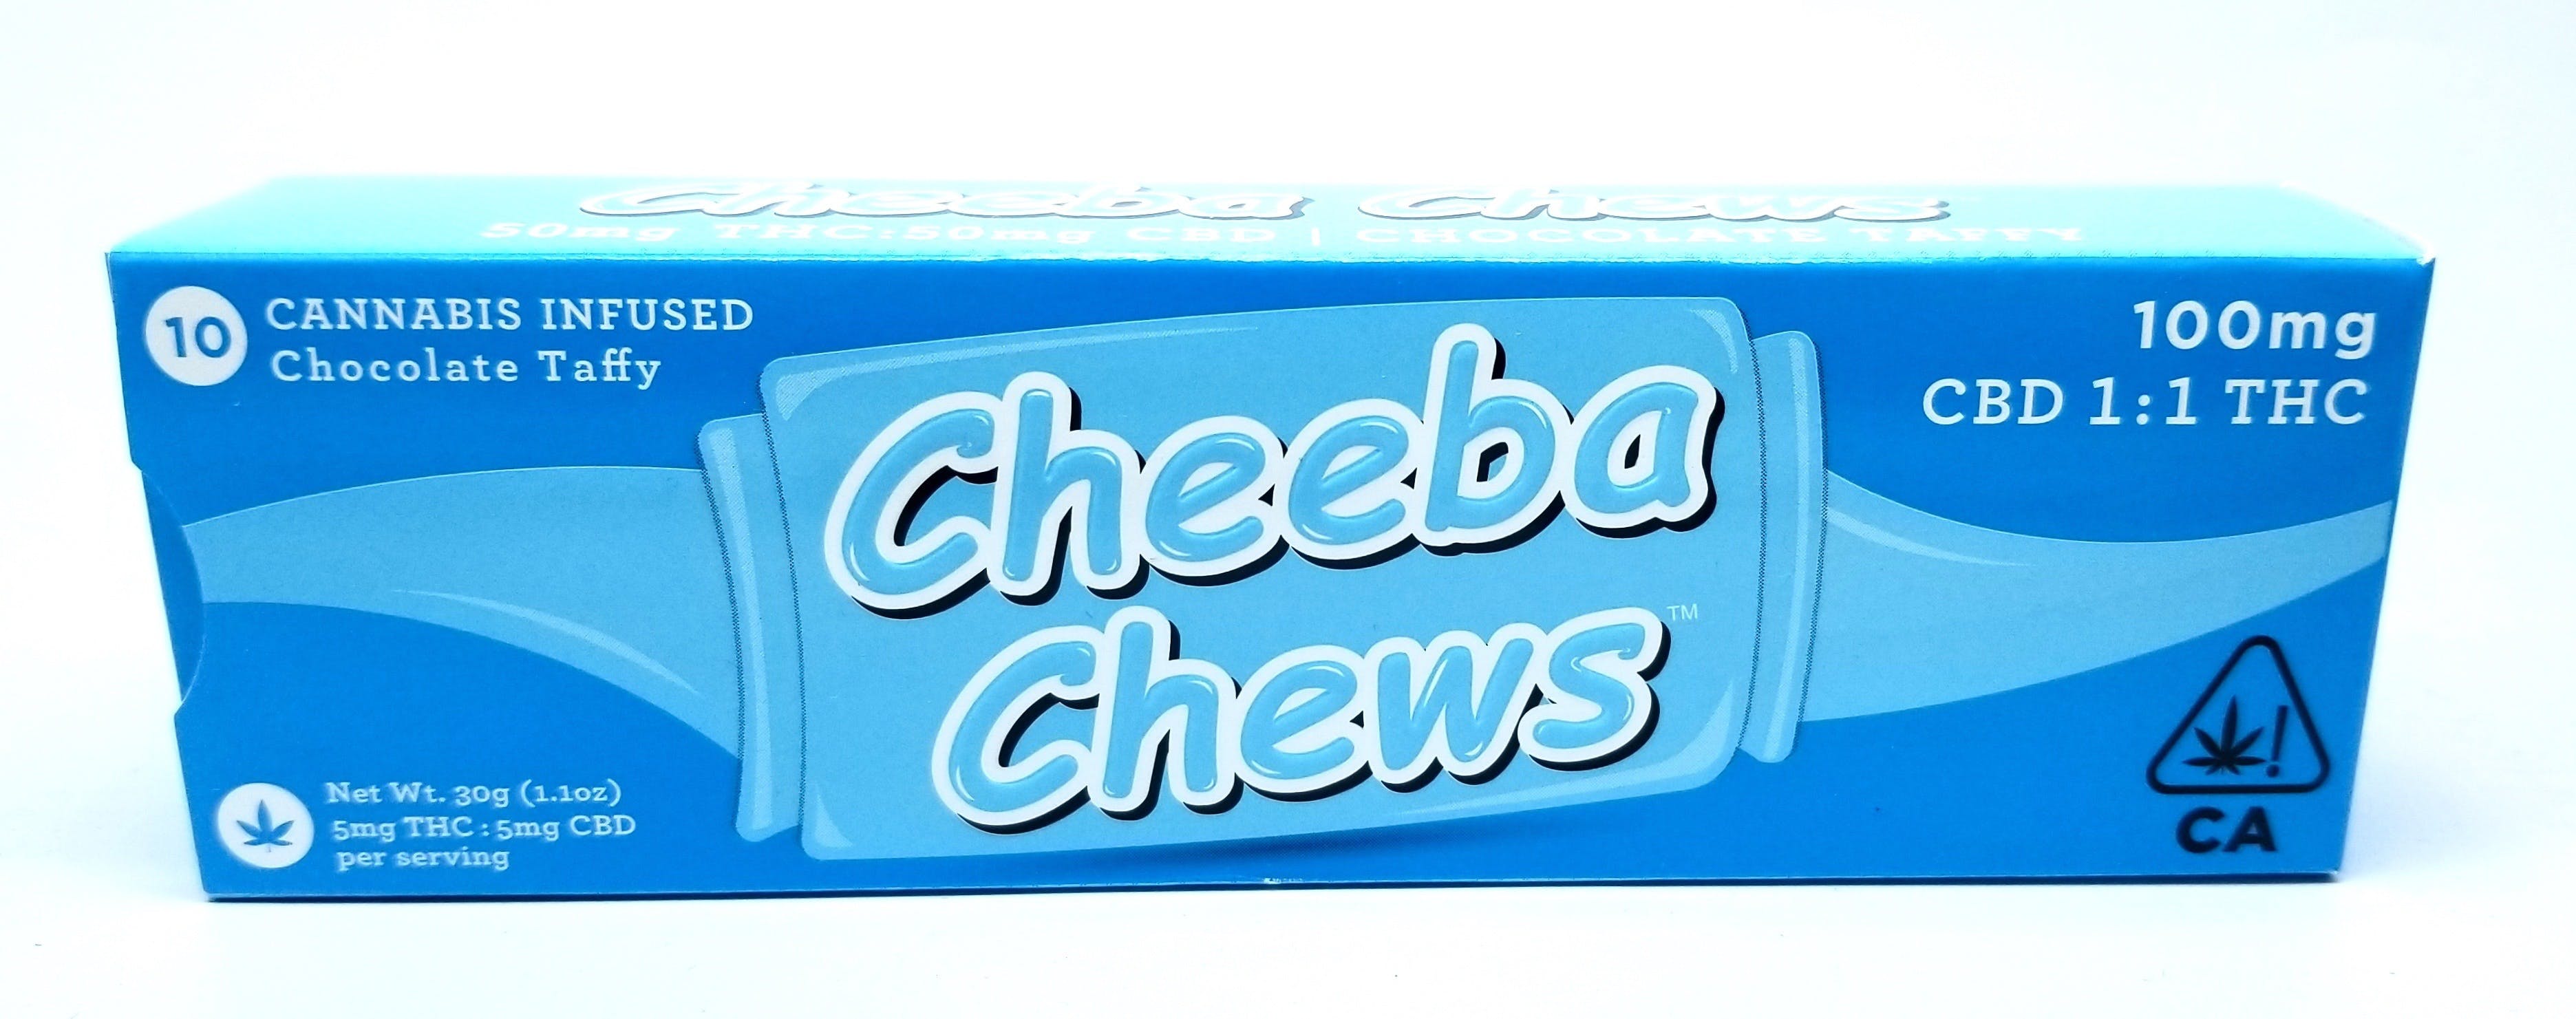 edible-11-thc-cbd-chocolate-taffy-cheeba-chews